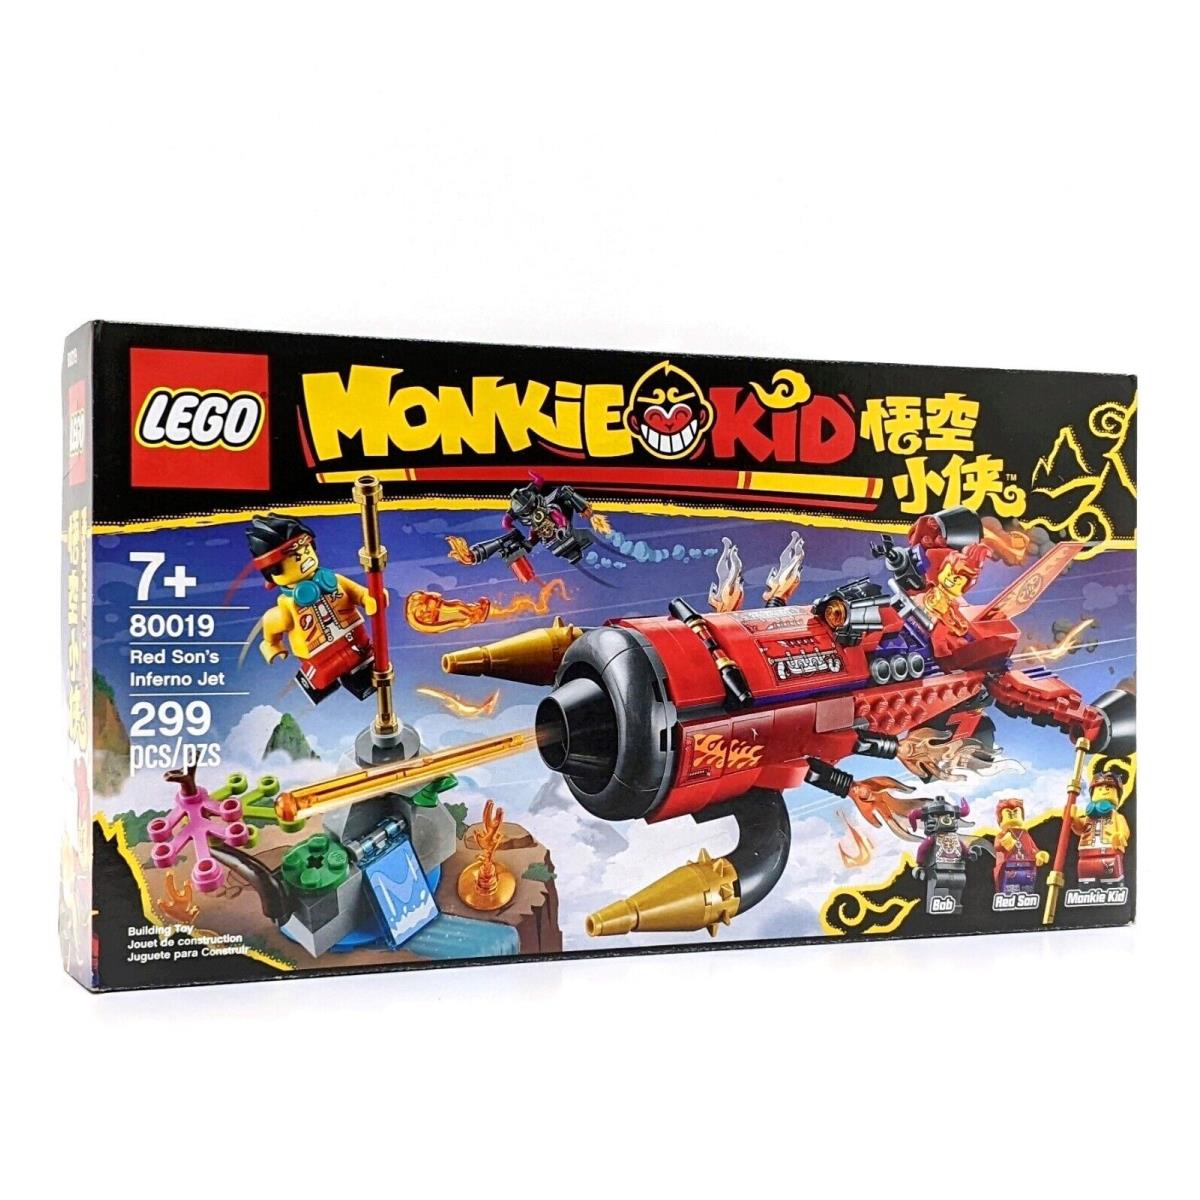 Lego Monkie Kid Season 2 80019: Red Son`s Inferno Jet /